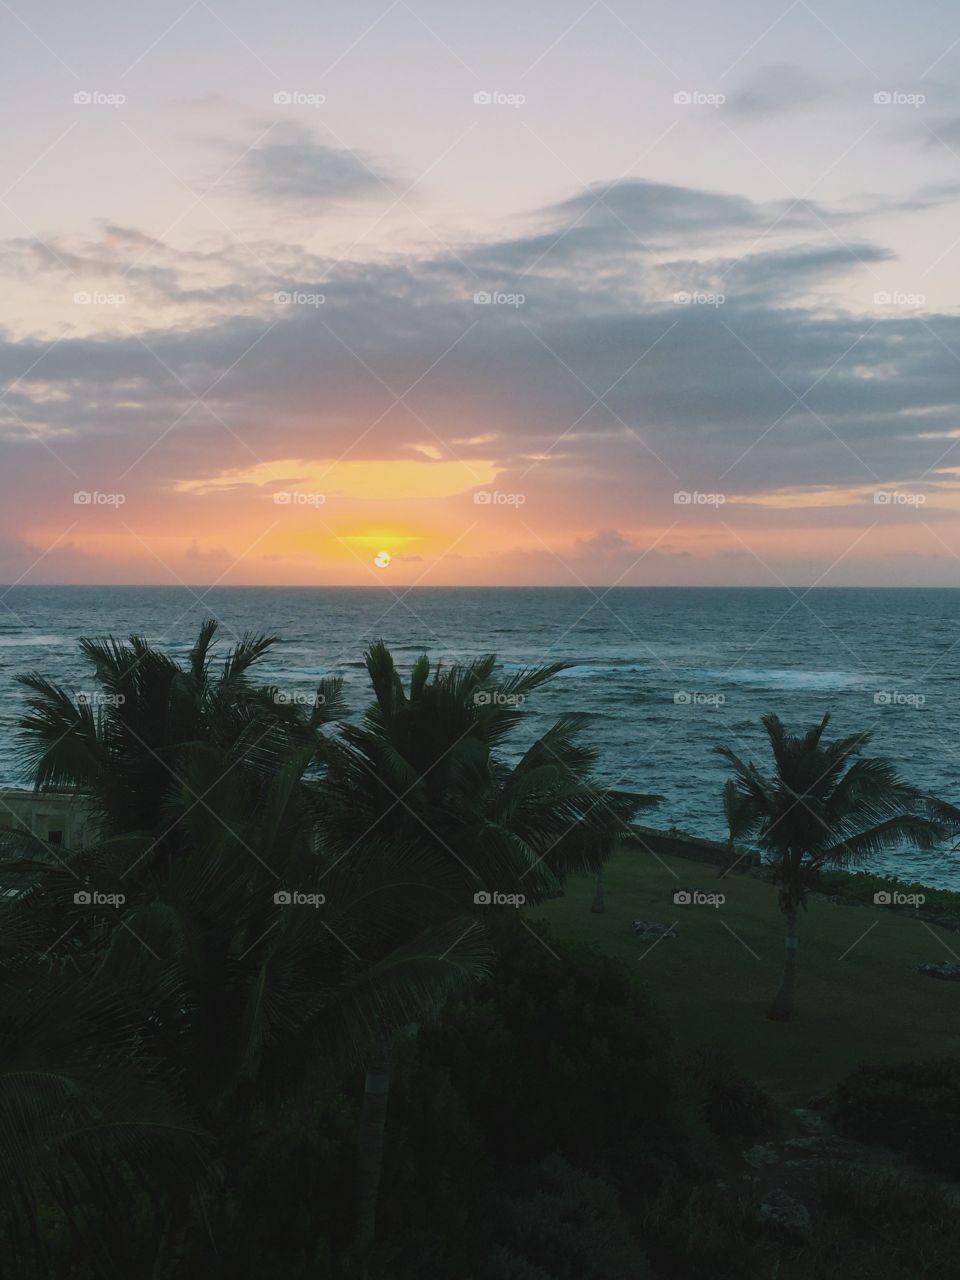 Barbados sunsets 